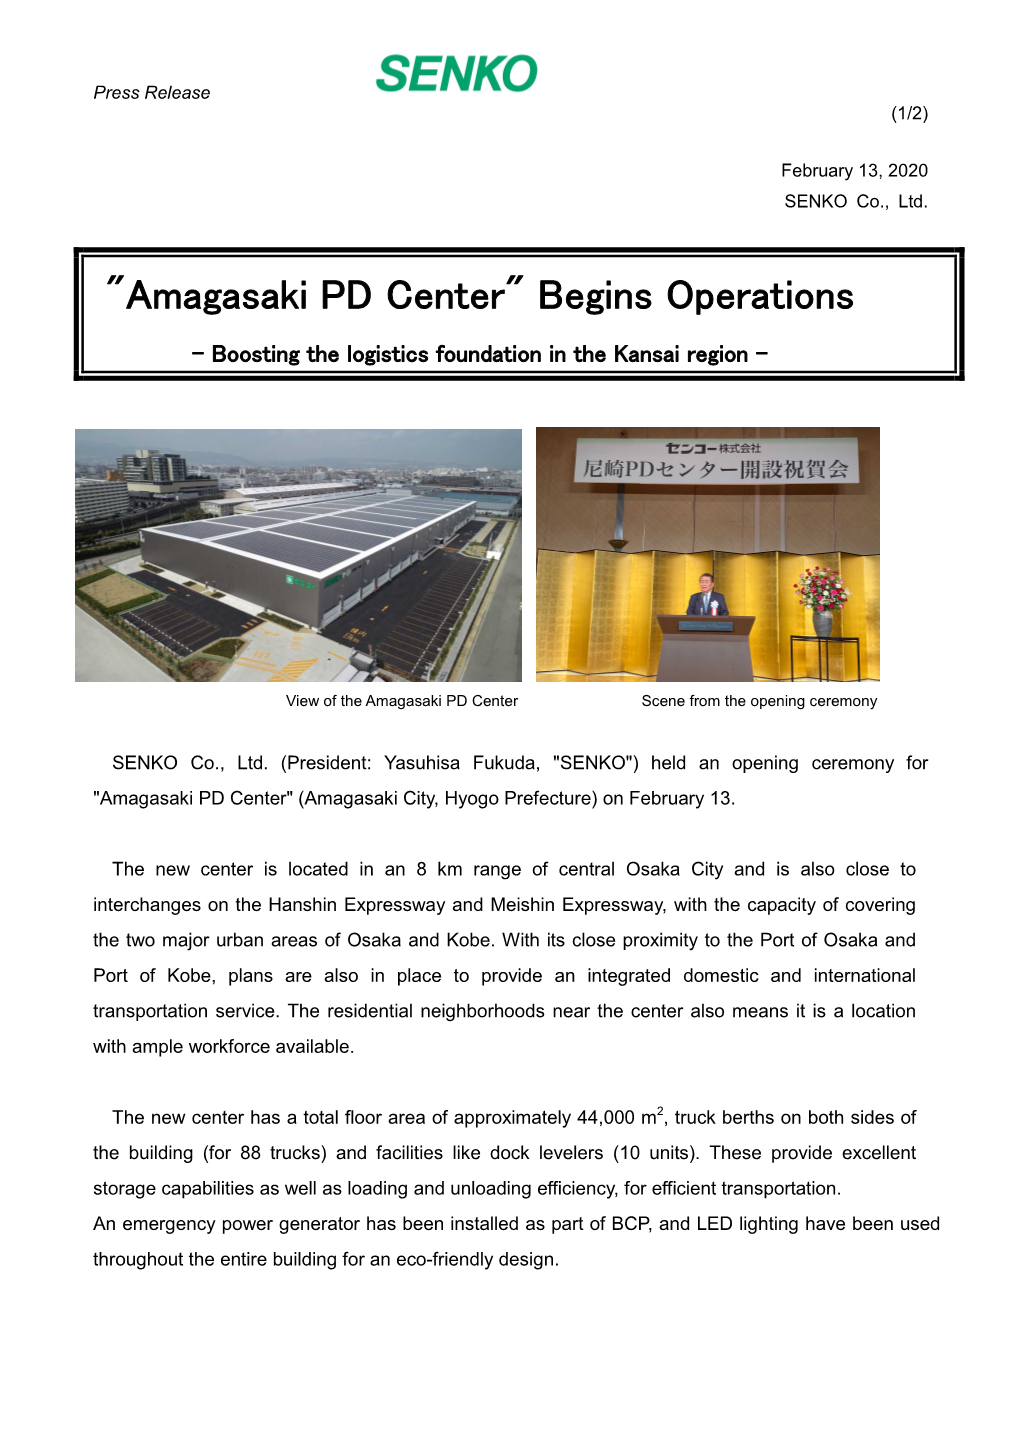 "Amagasaki PD Center" Begins Operations